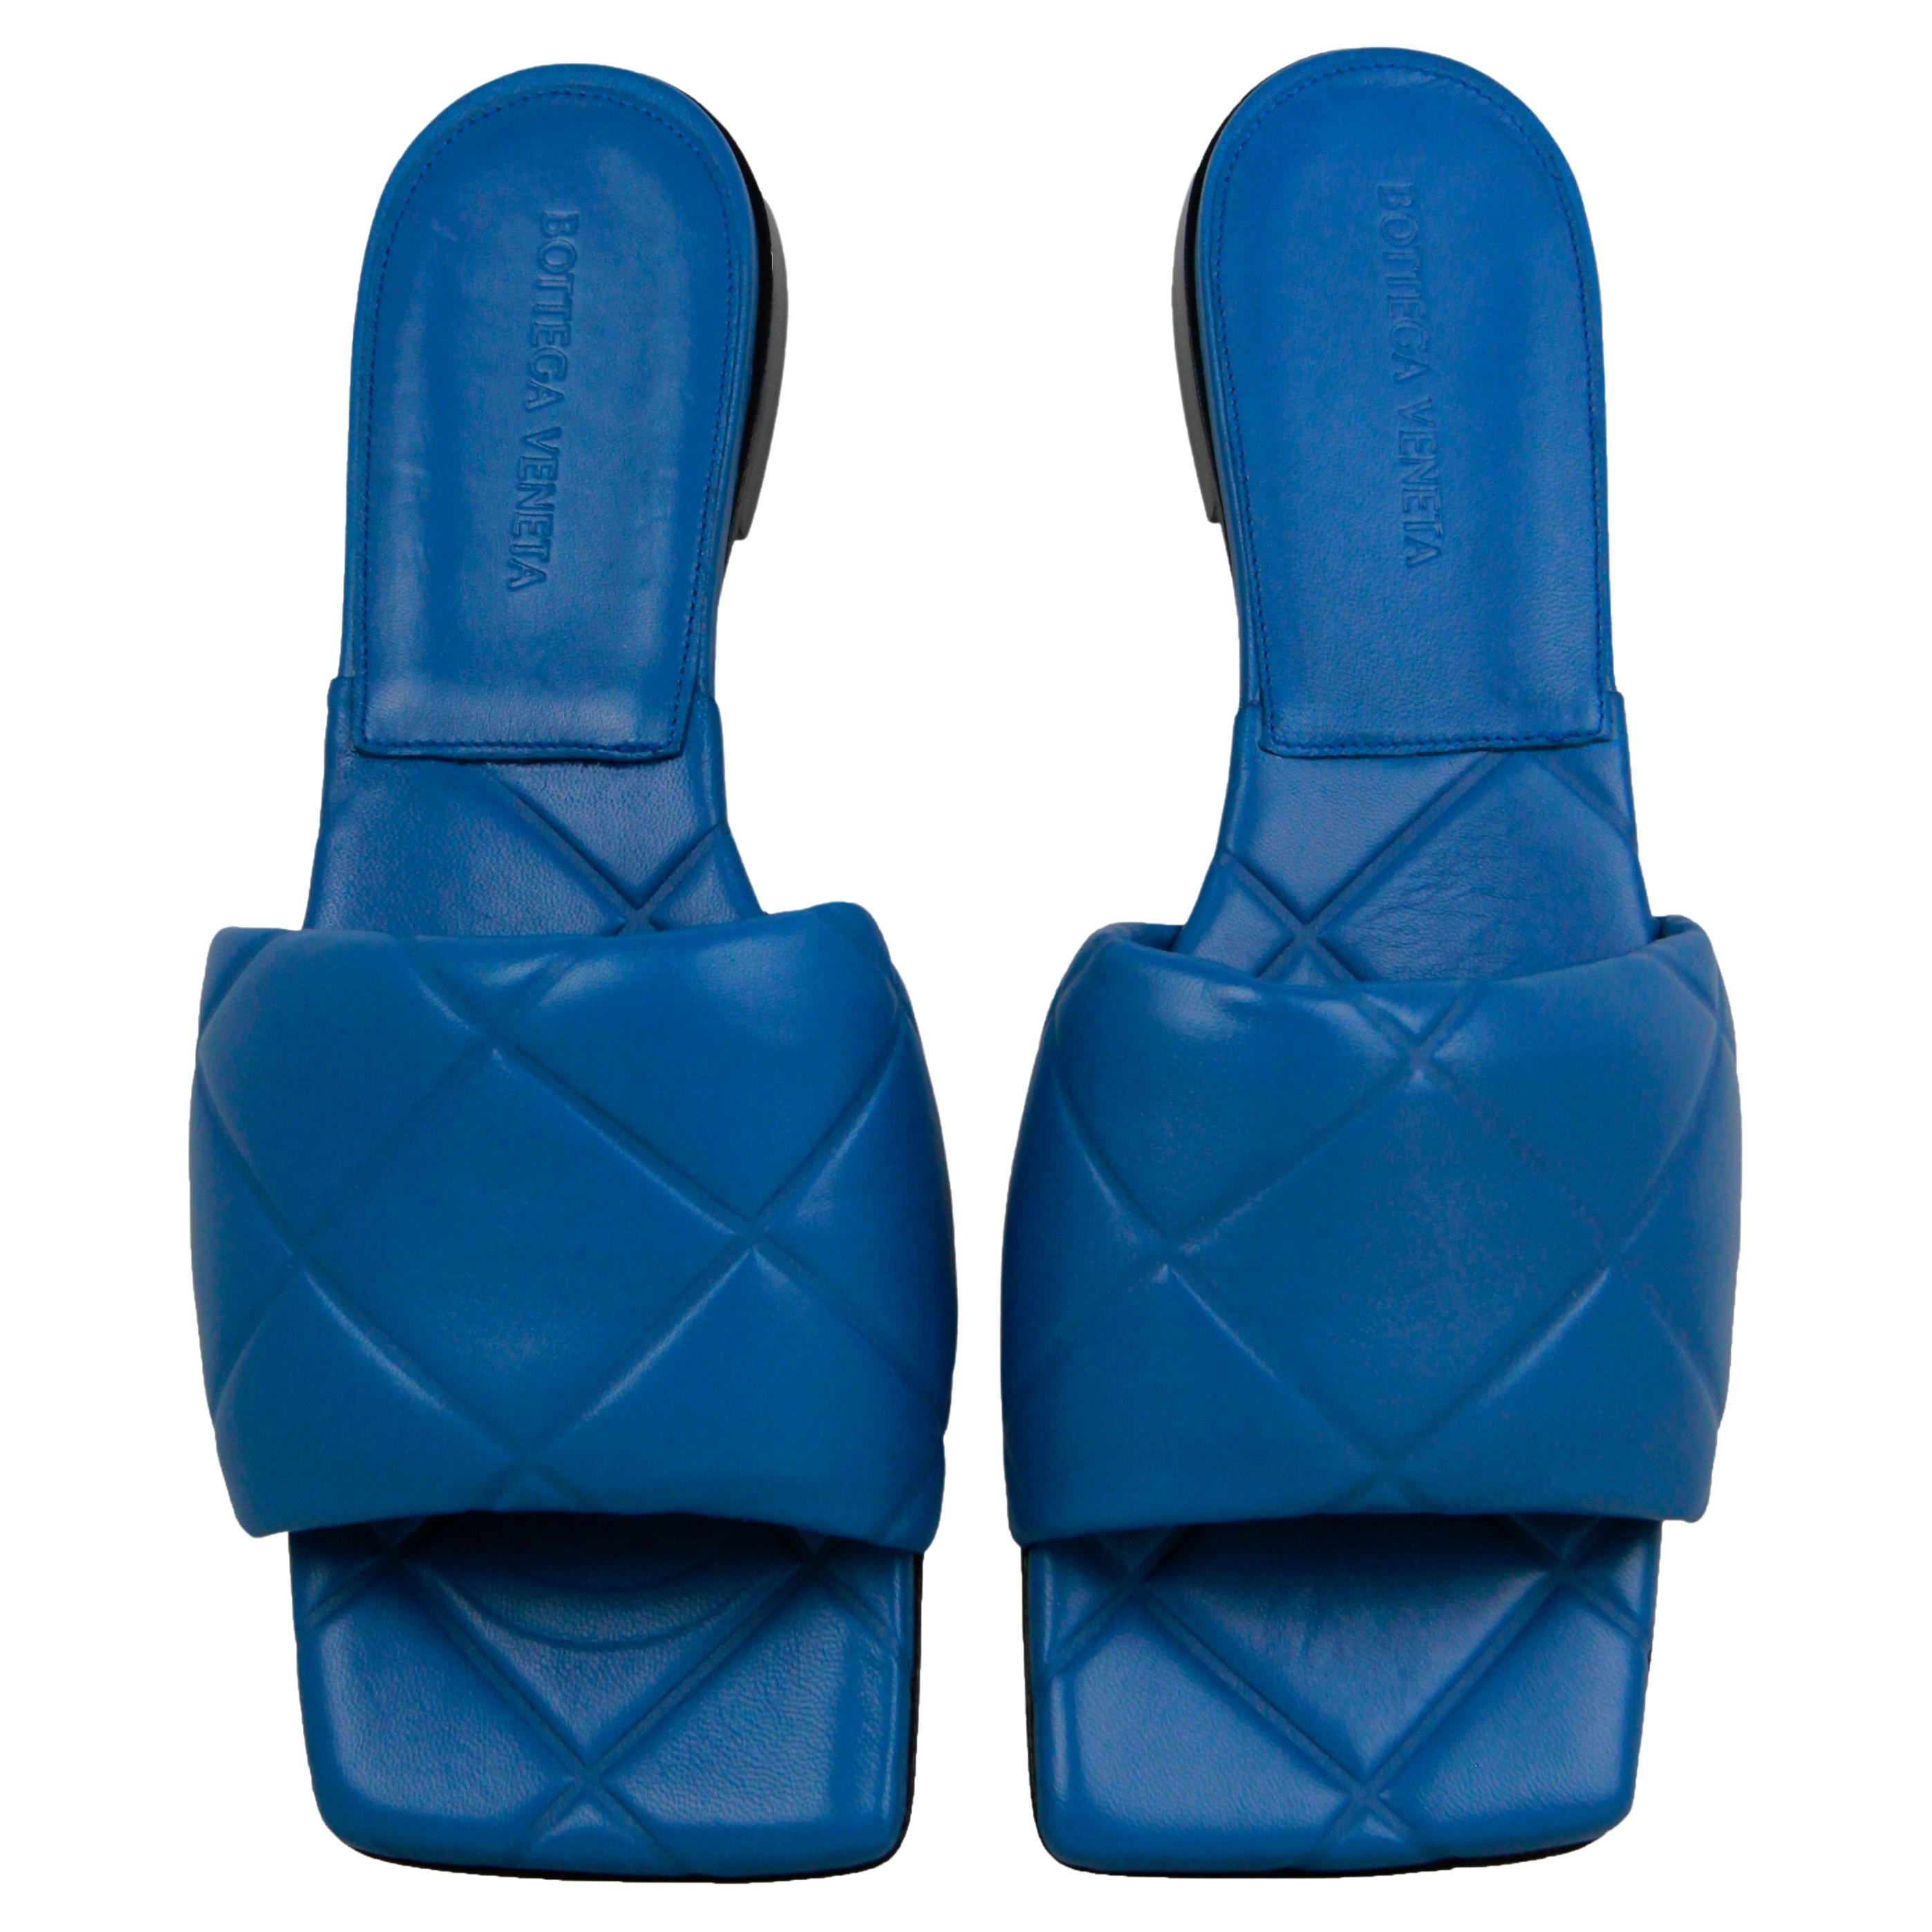 Bottega Veneta NEW Pacific Blue Leather Quilted Flat Sandals sz 39